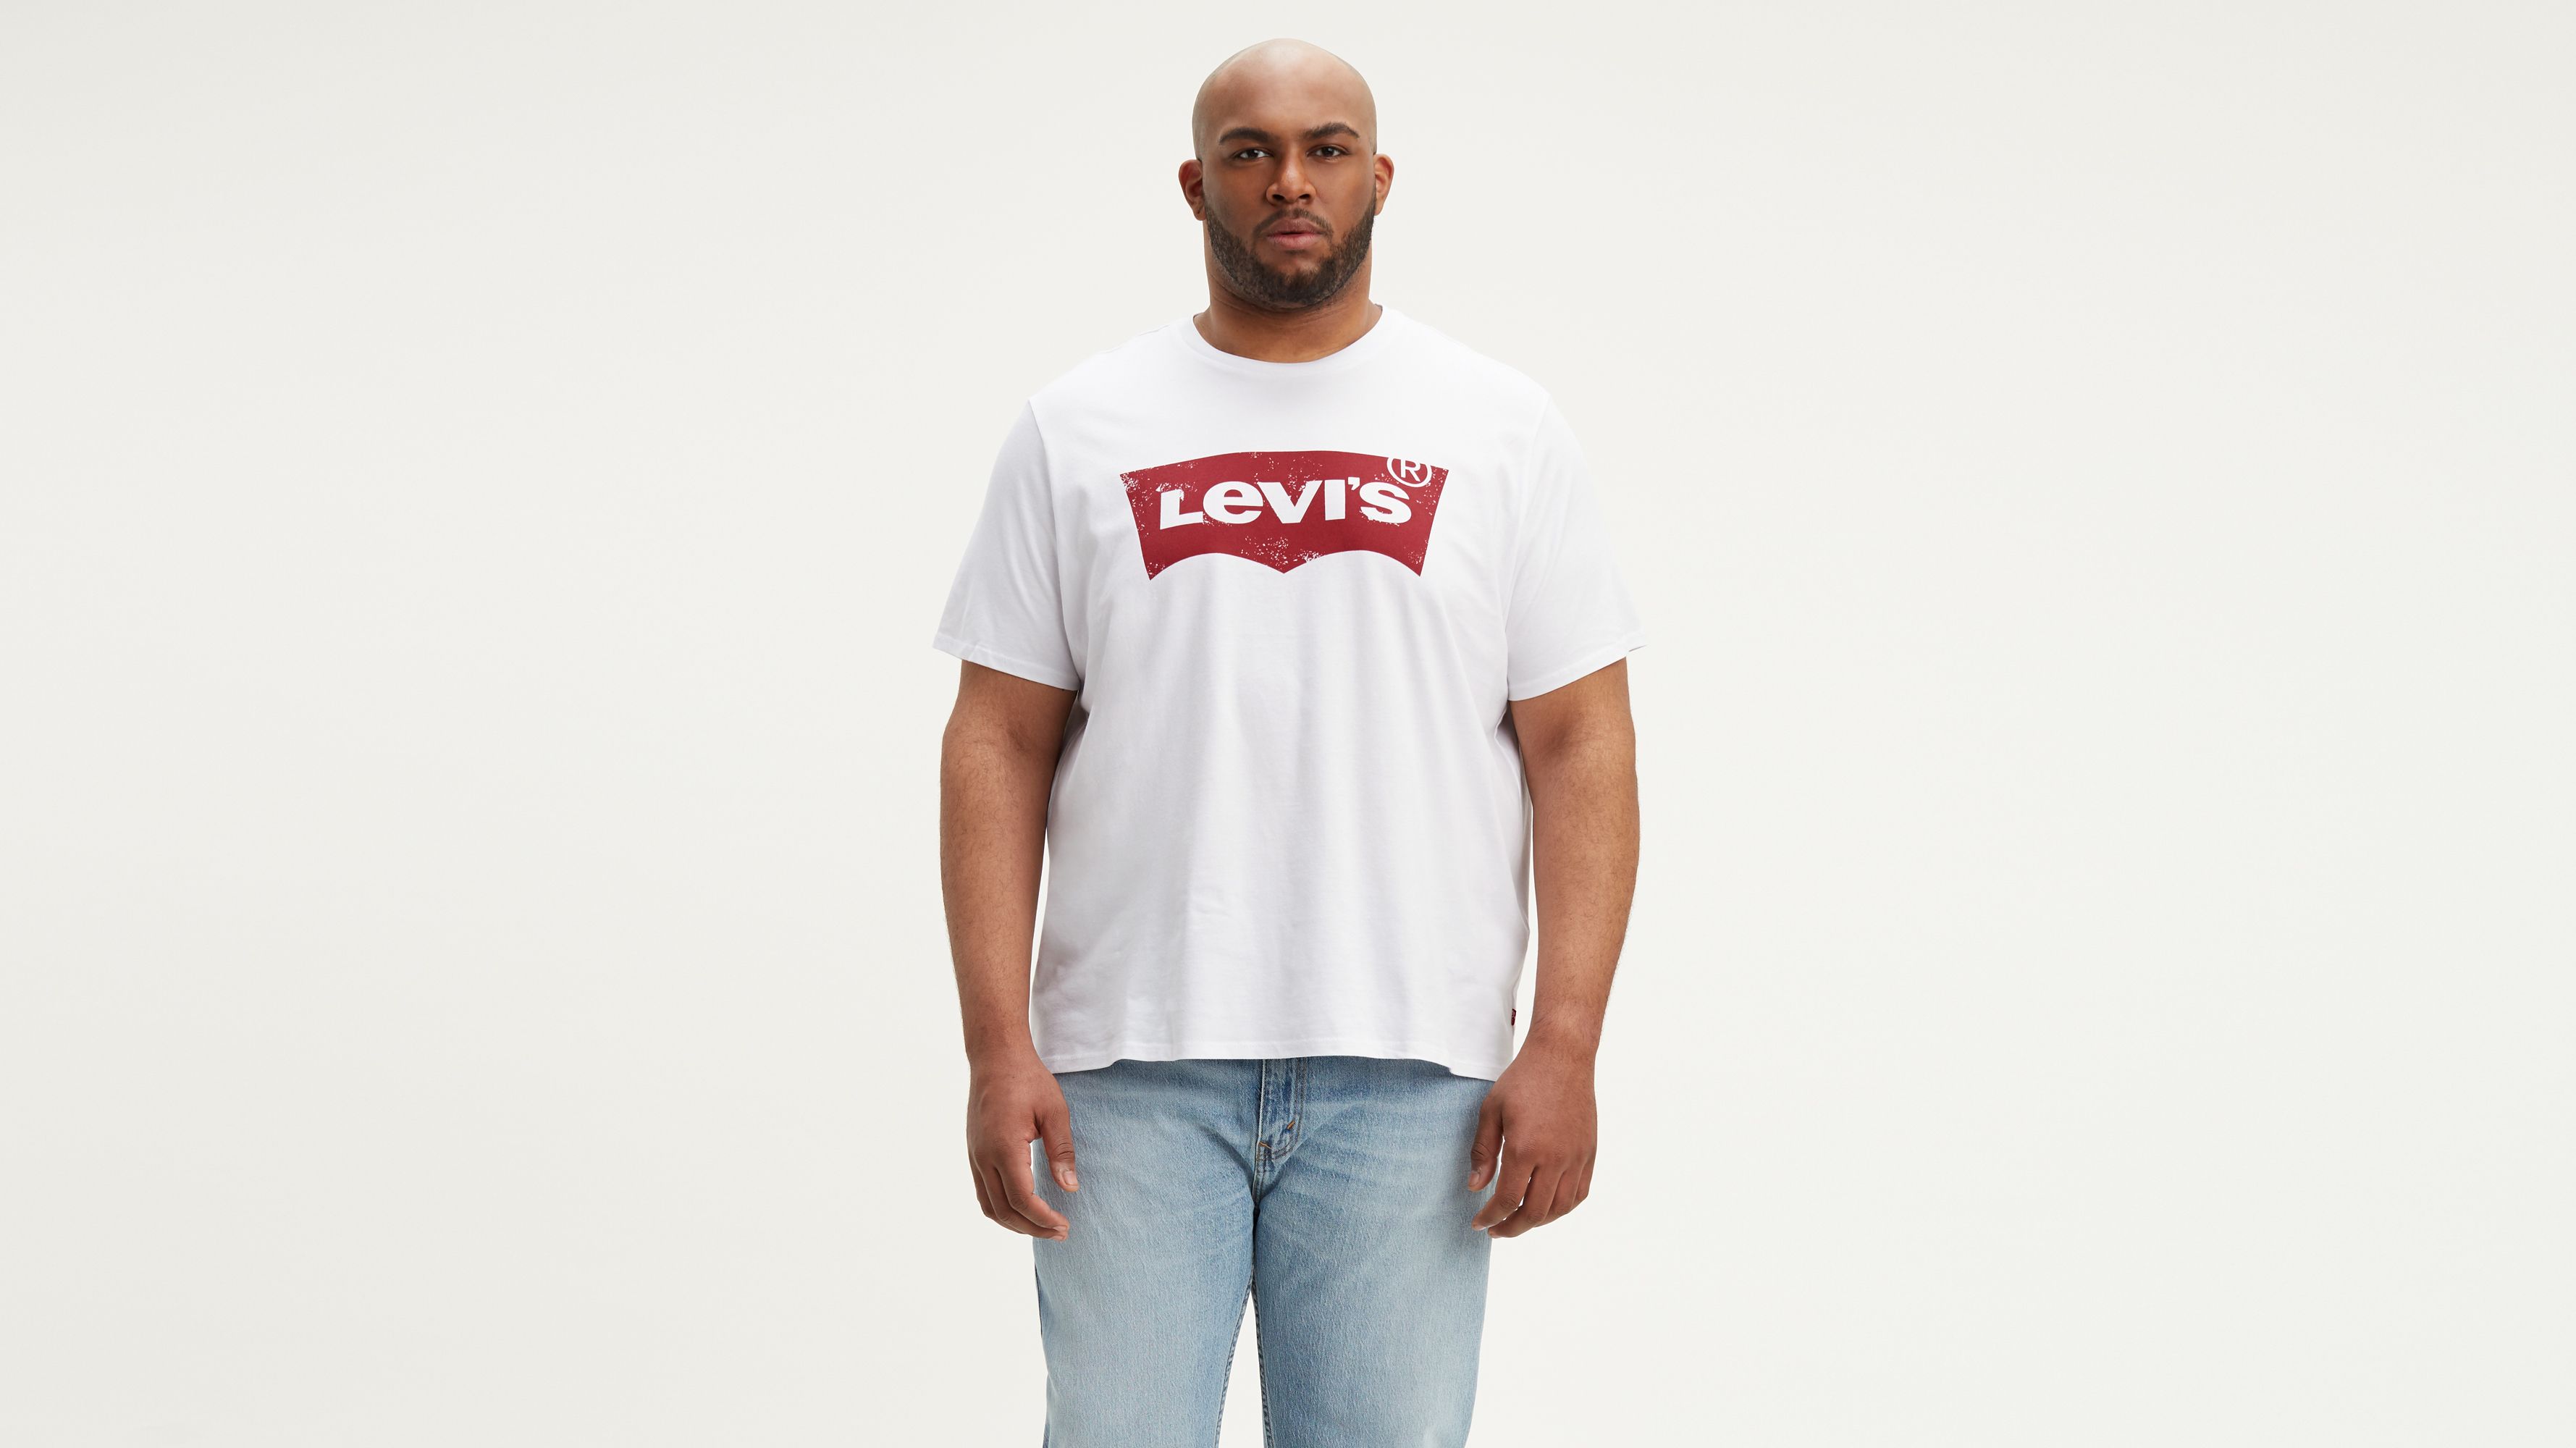 levi's white t shirt price